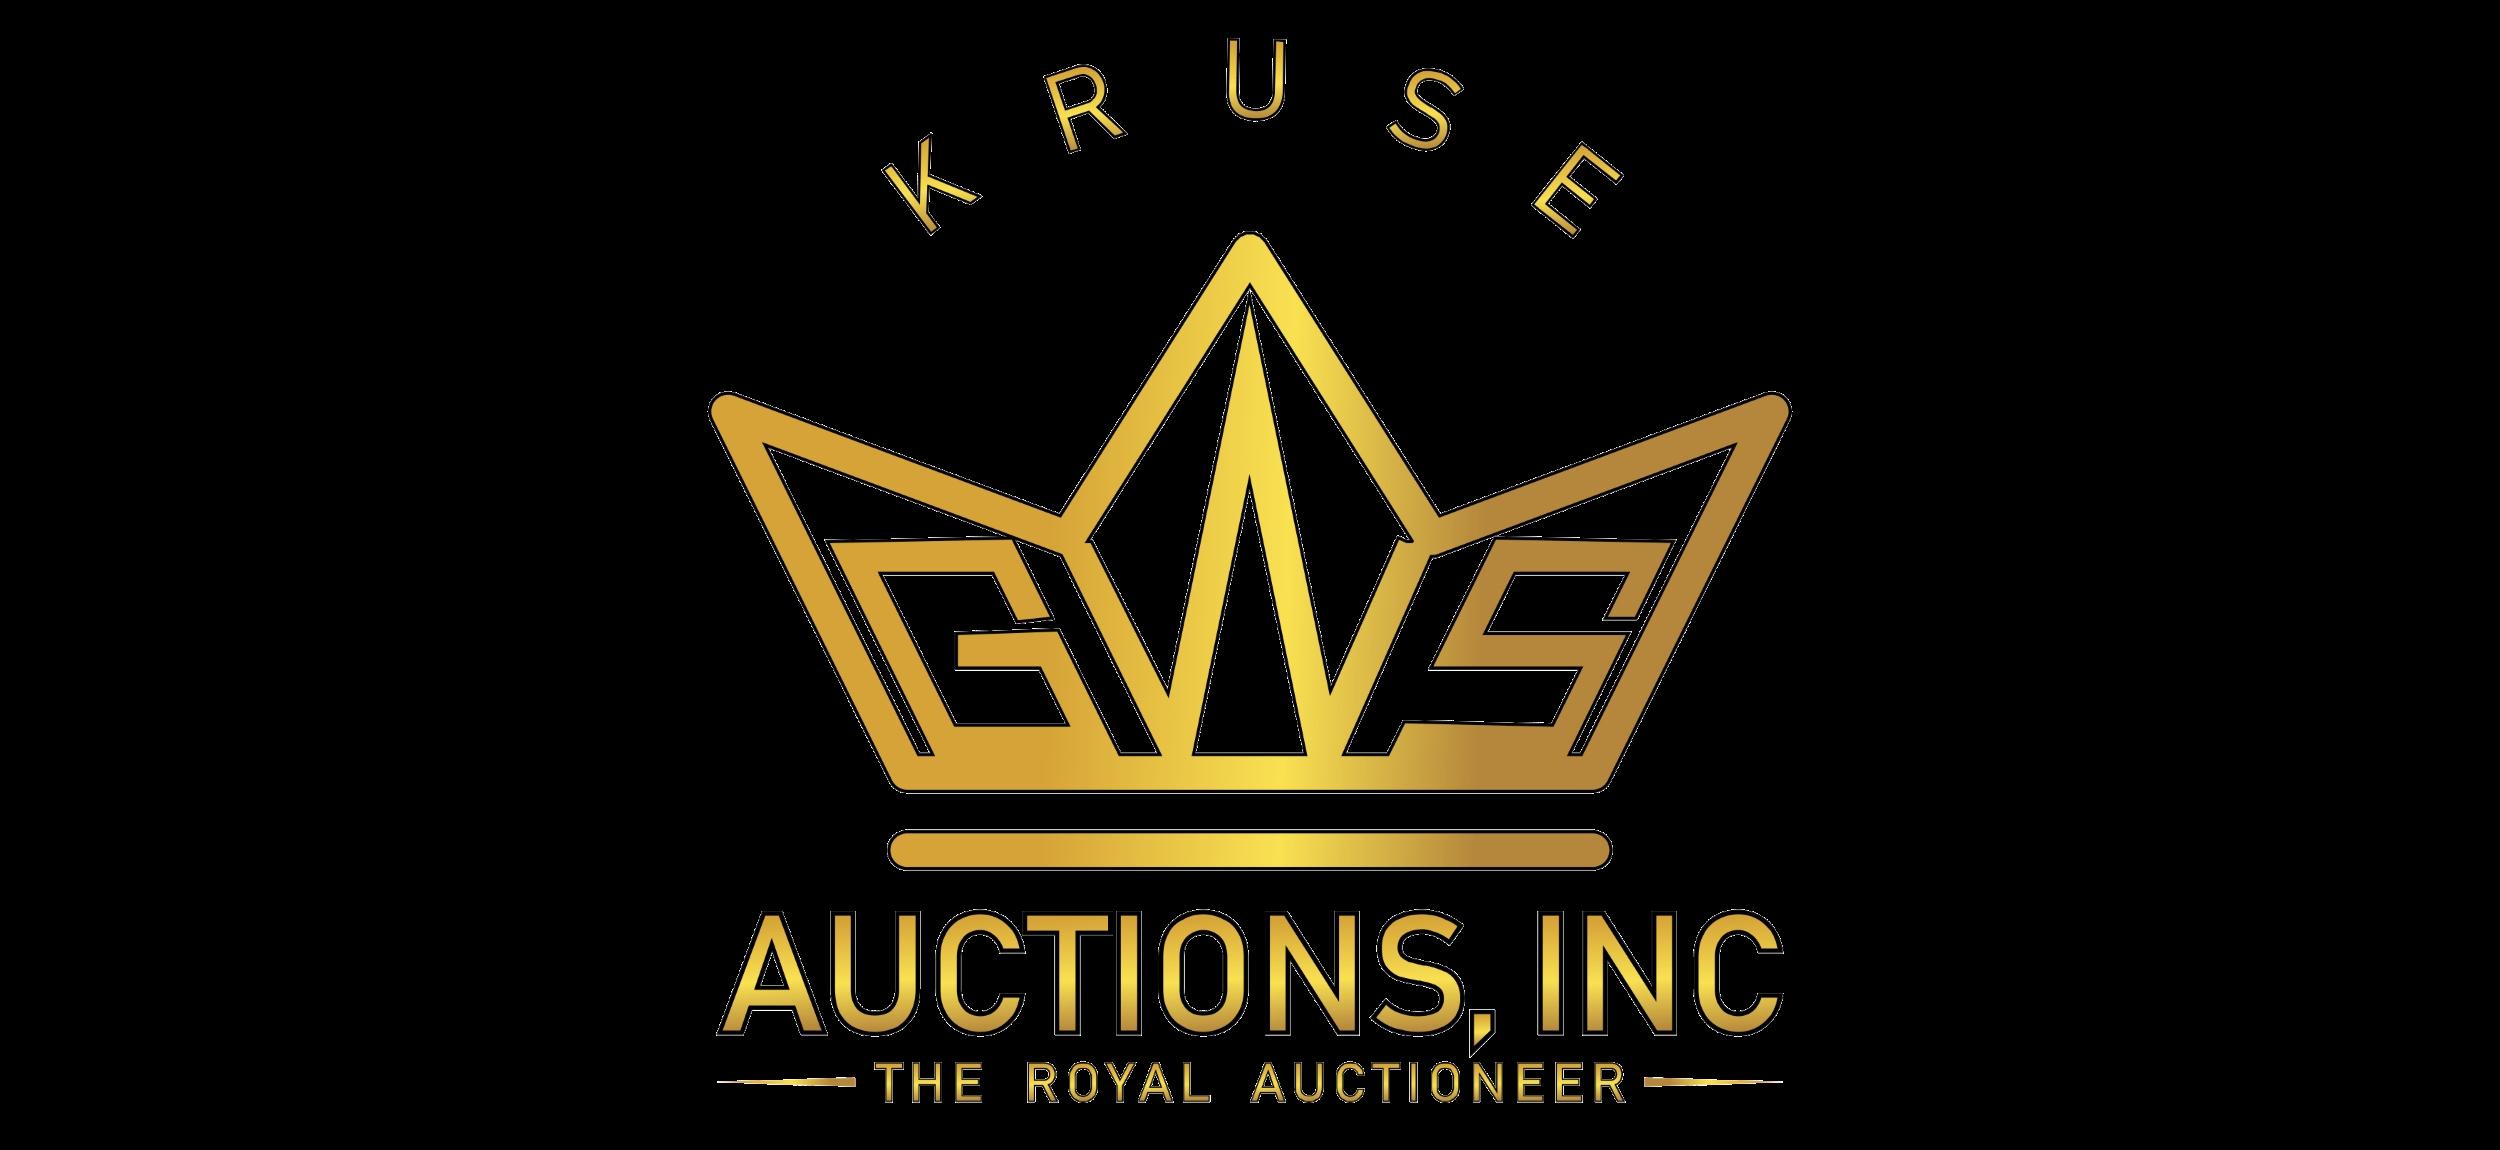 GWS Auctions, Inc.